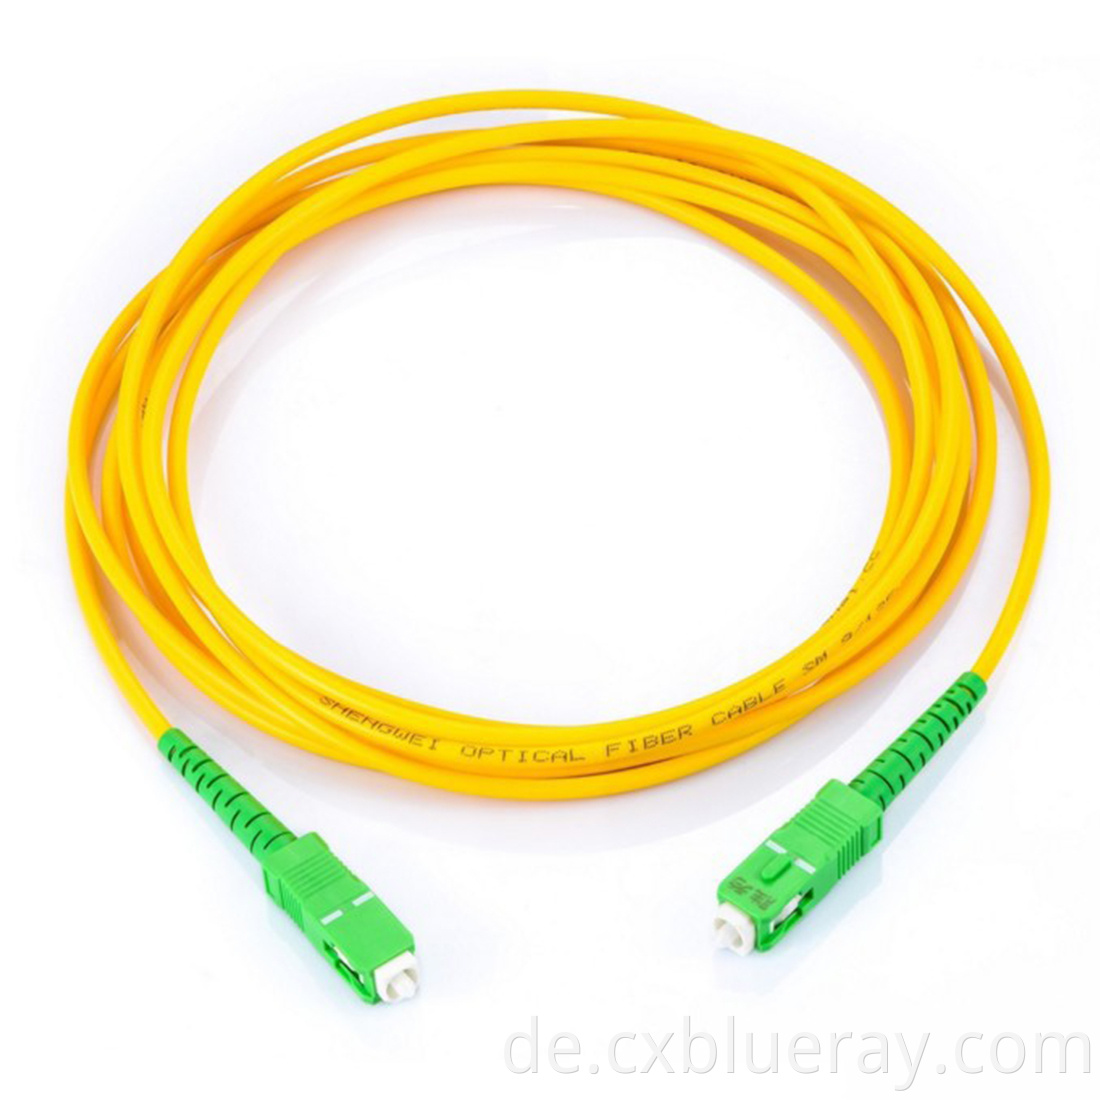 Fiber optic patch - cord